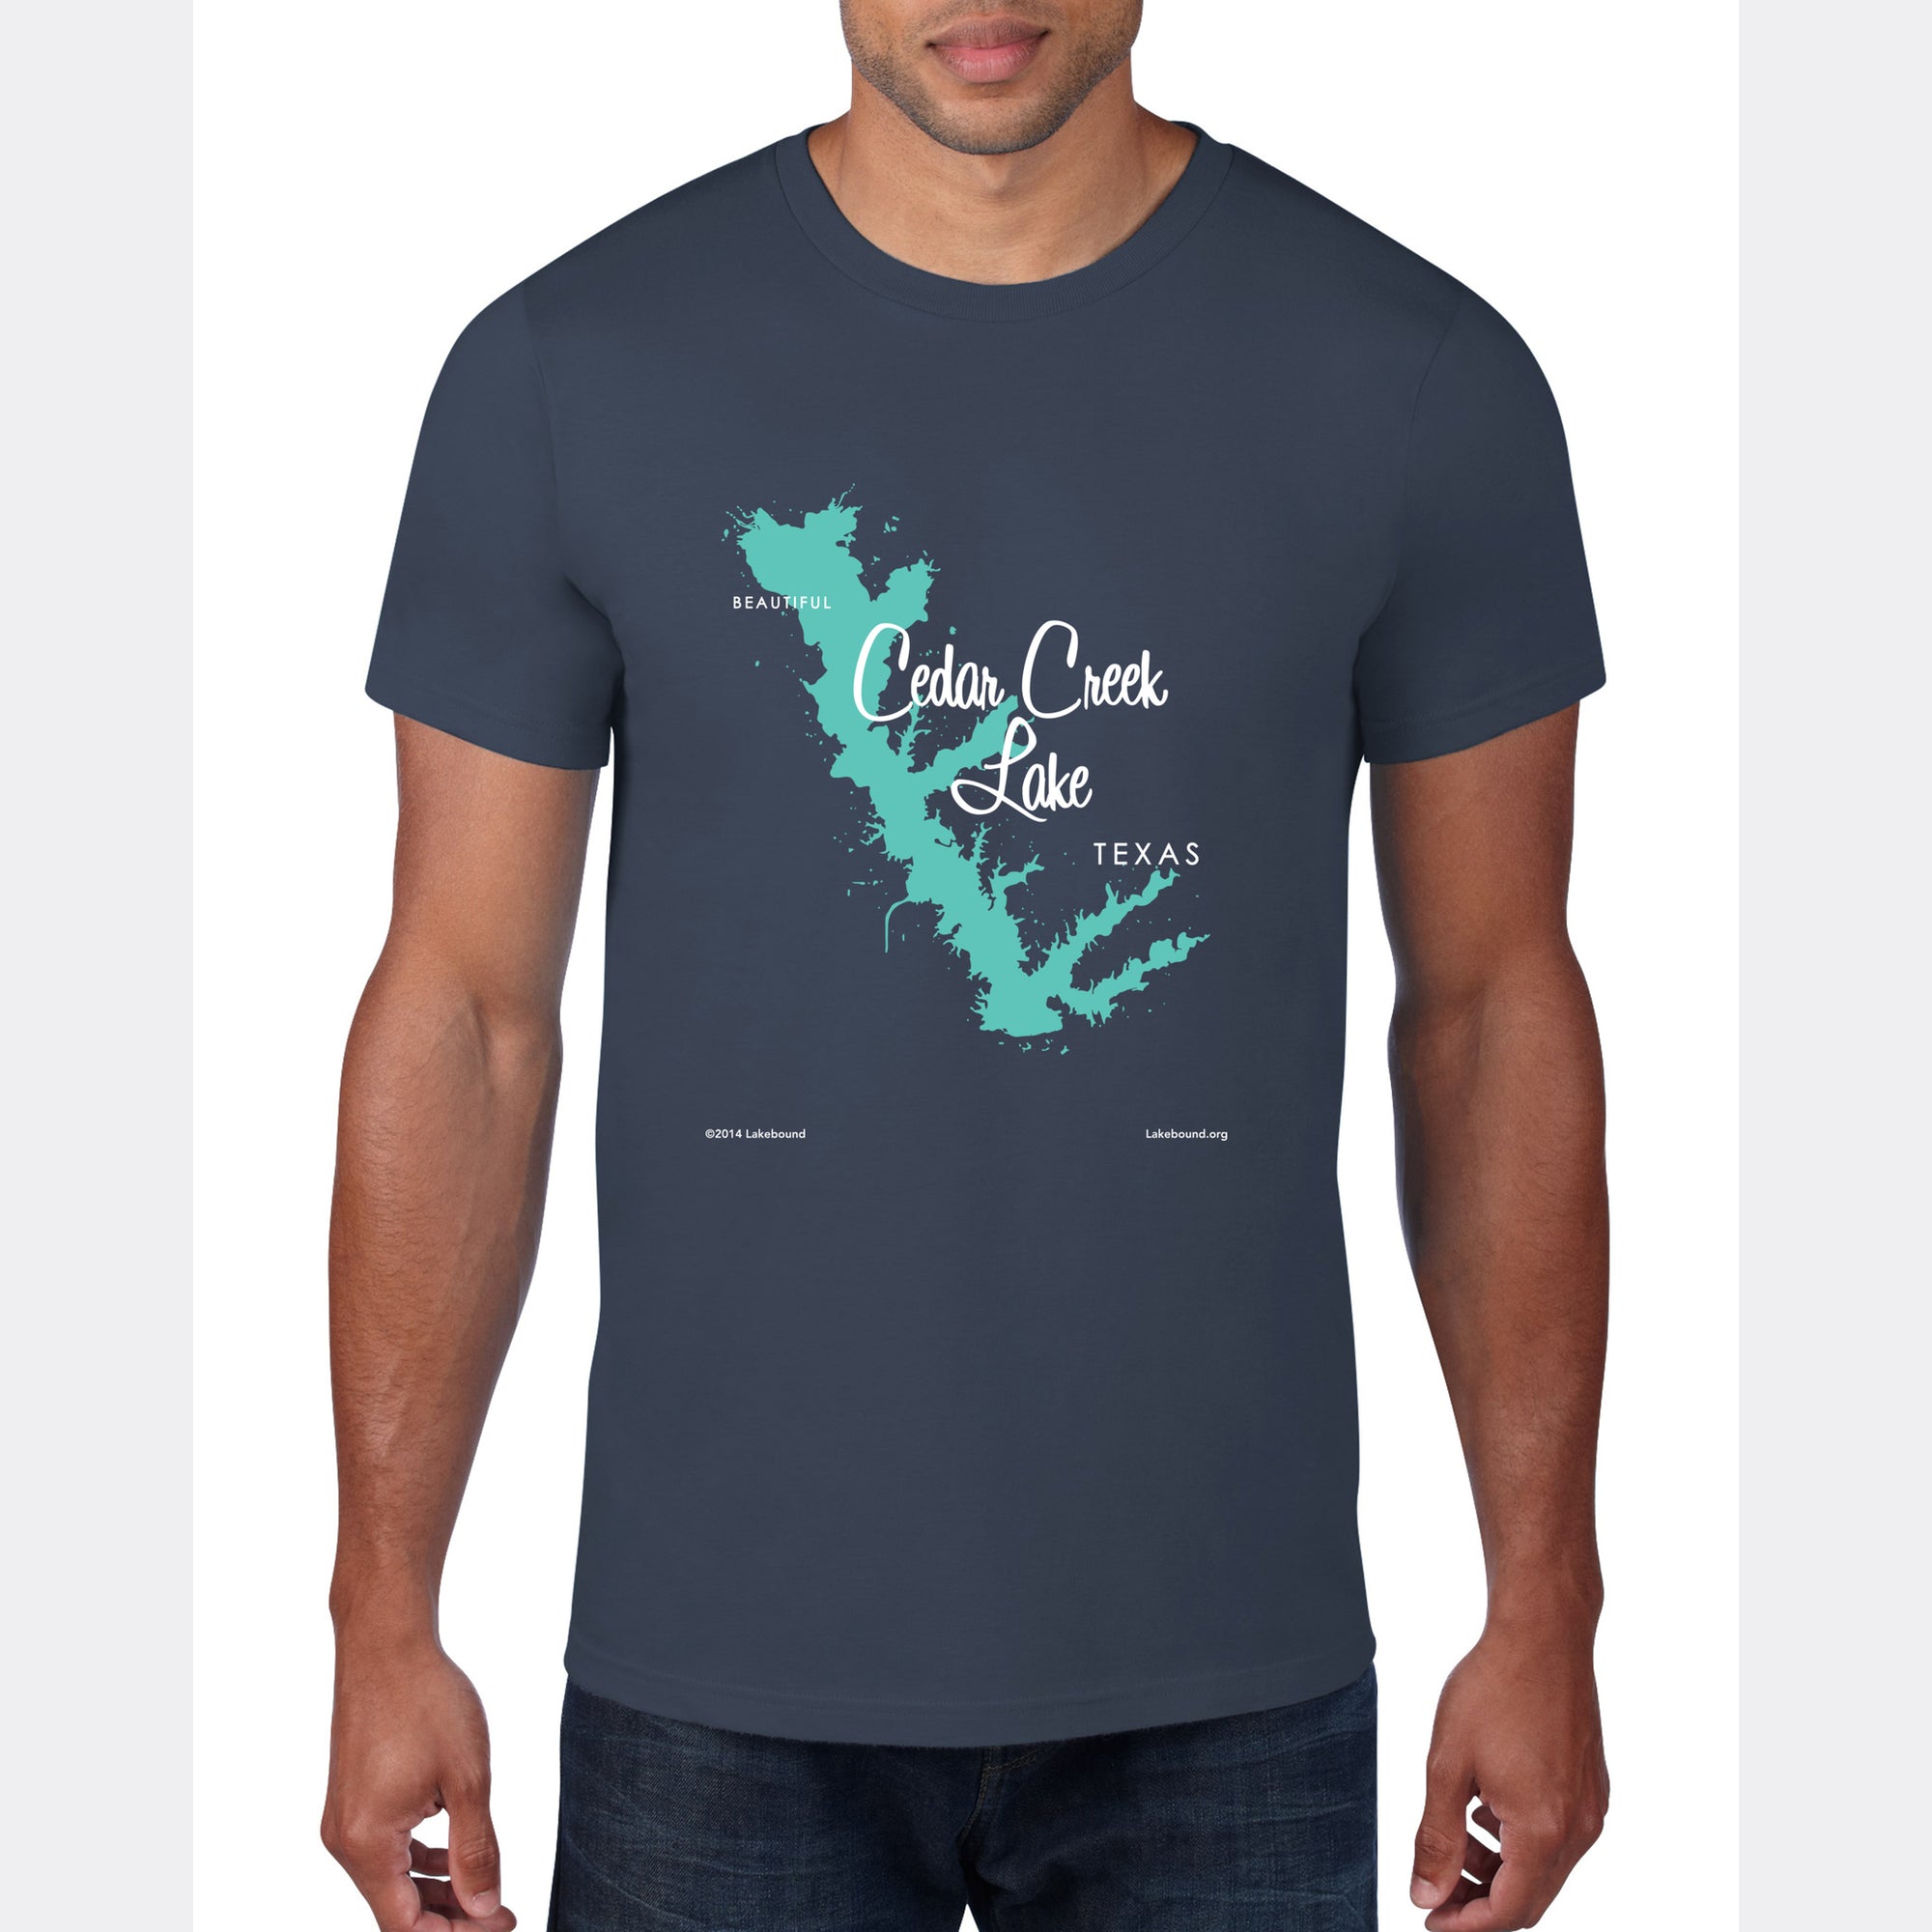 Cedar Creek Lake Texas, T-Shirt